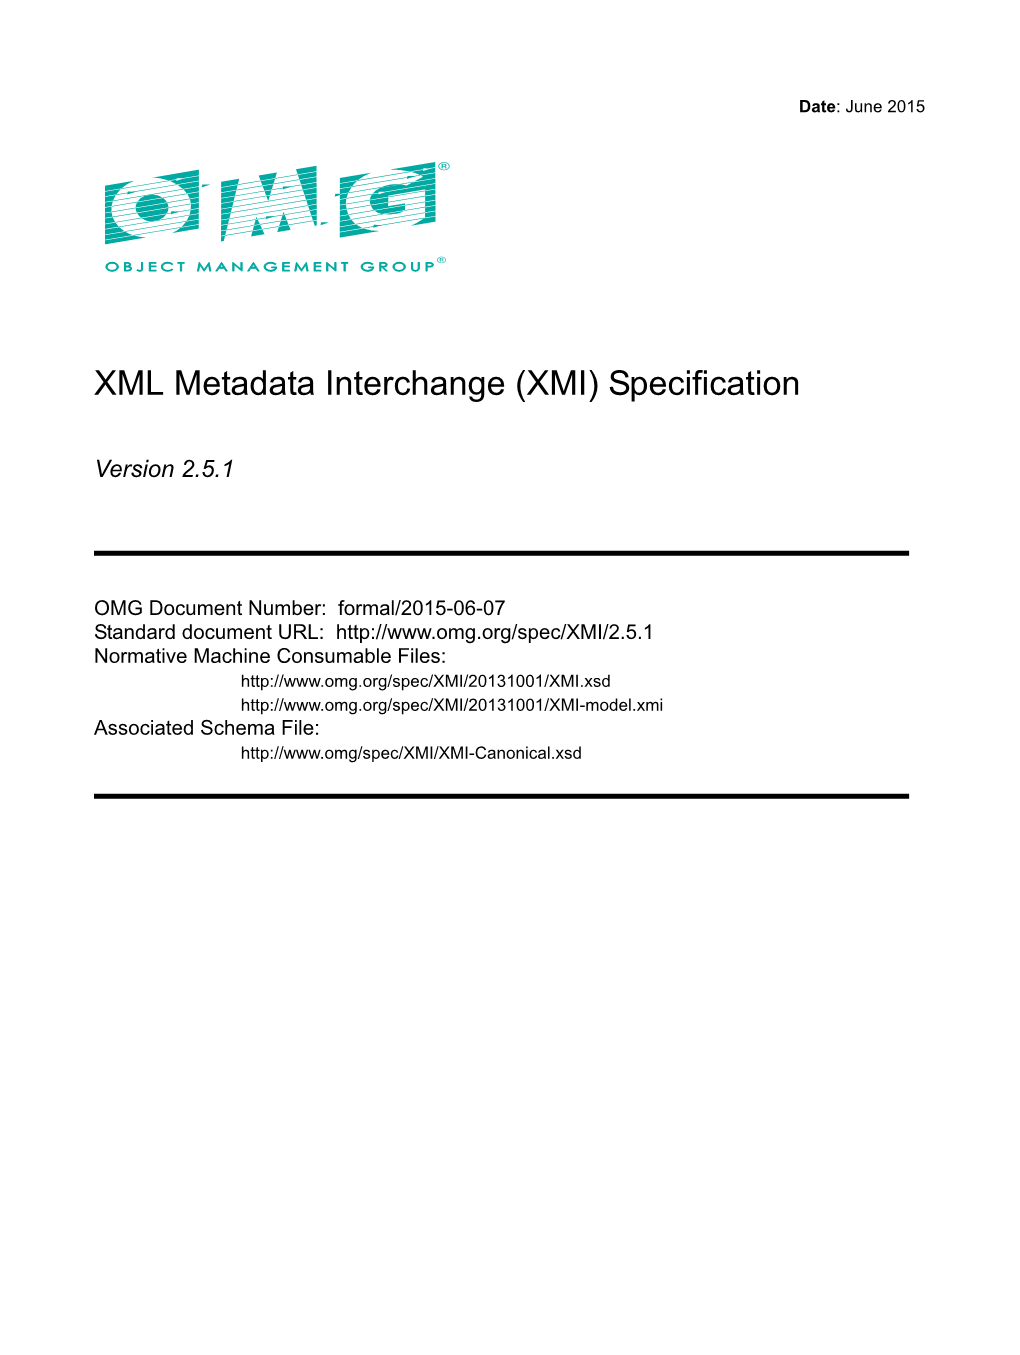 XML Metadata Interchange (XMI) Specification